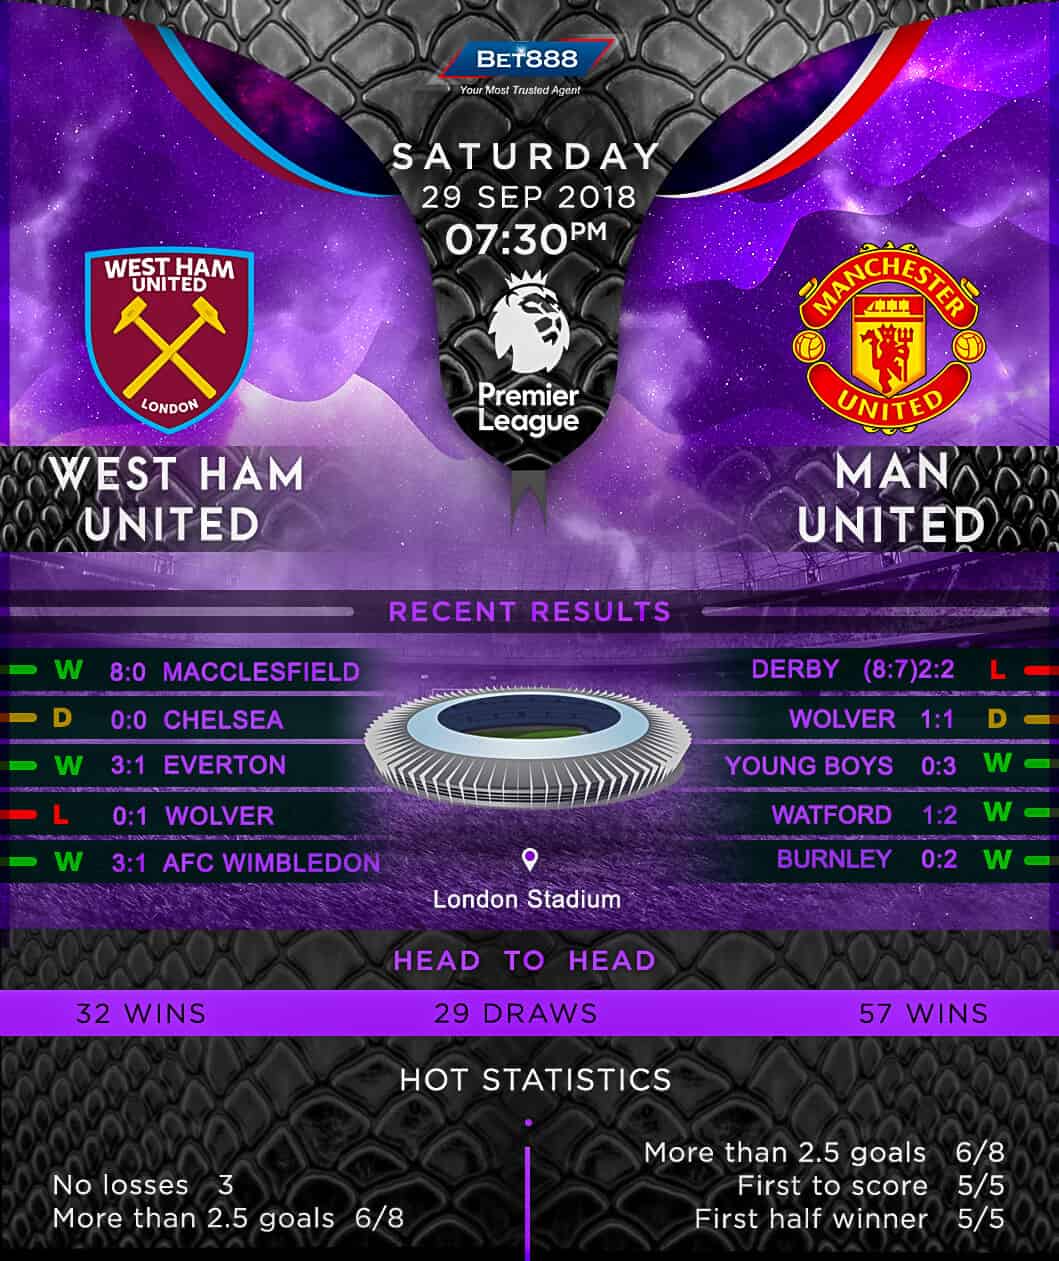 West Ham United vs Manchester United 29/09/18